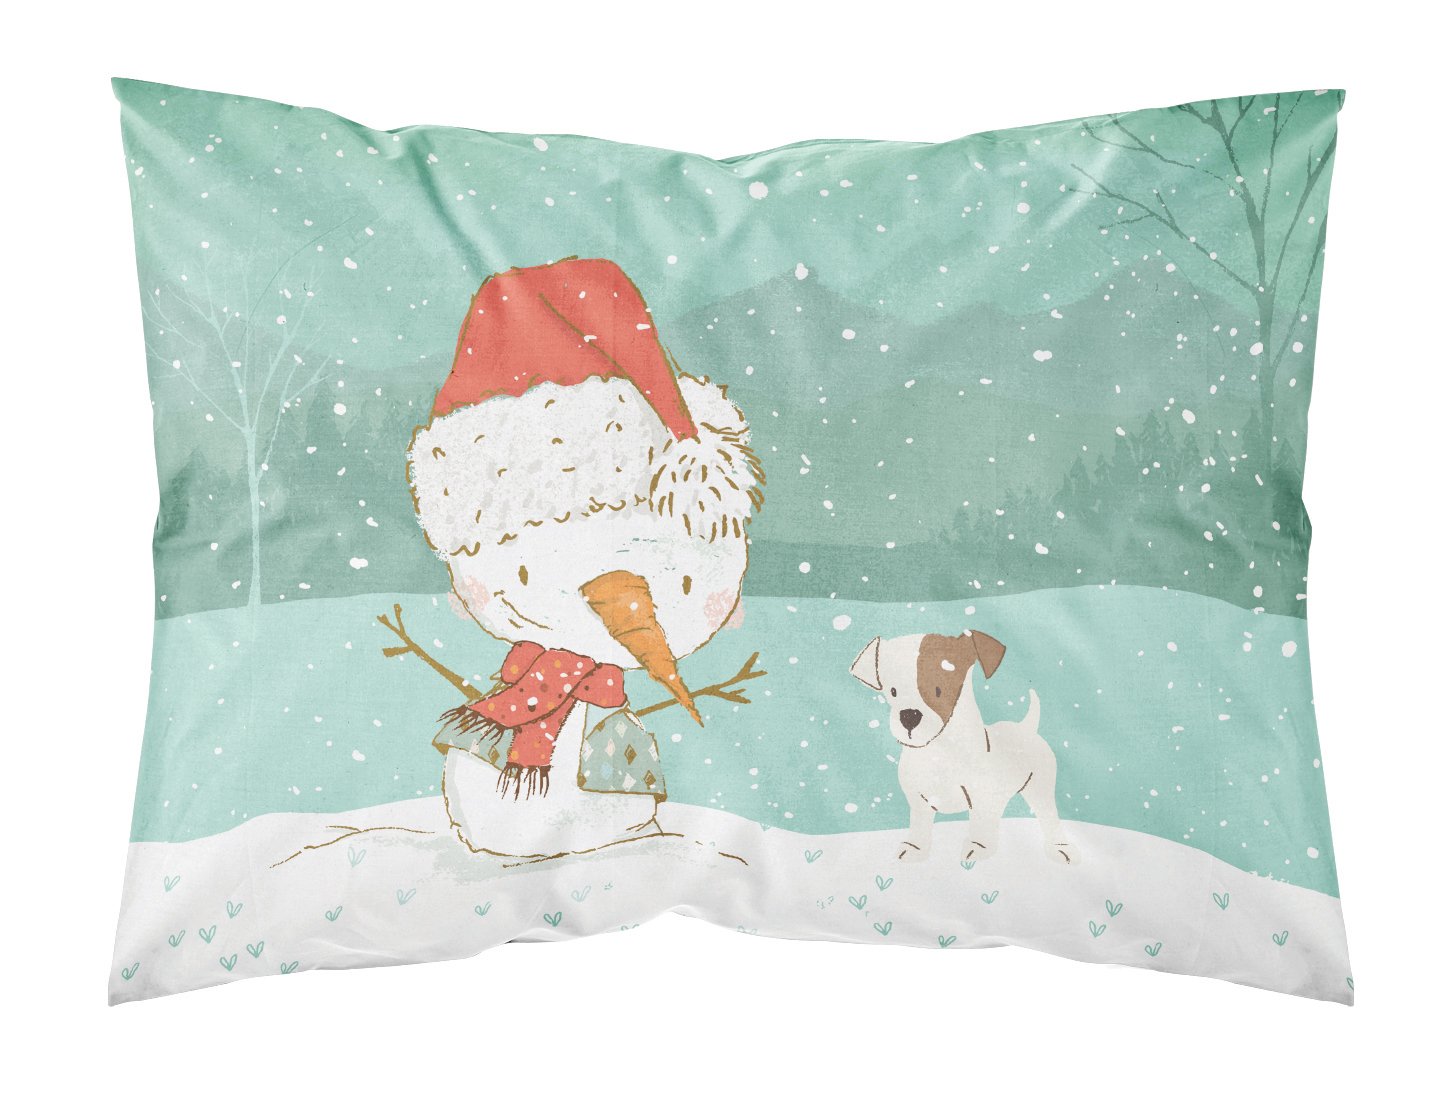 Jack Russell Terrier Snowman Christmas Fabric Standard Pillowcase CK2090PILLOWCASE by Caroline's Treasures